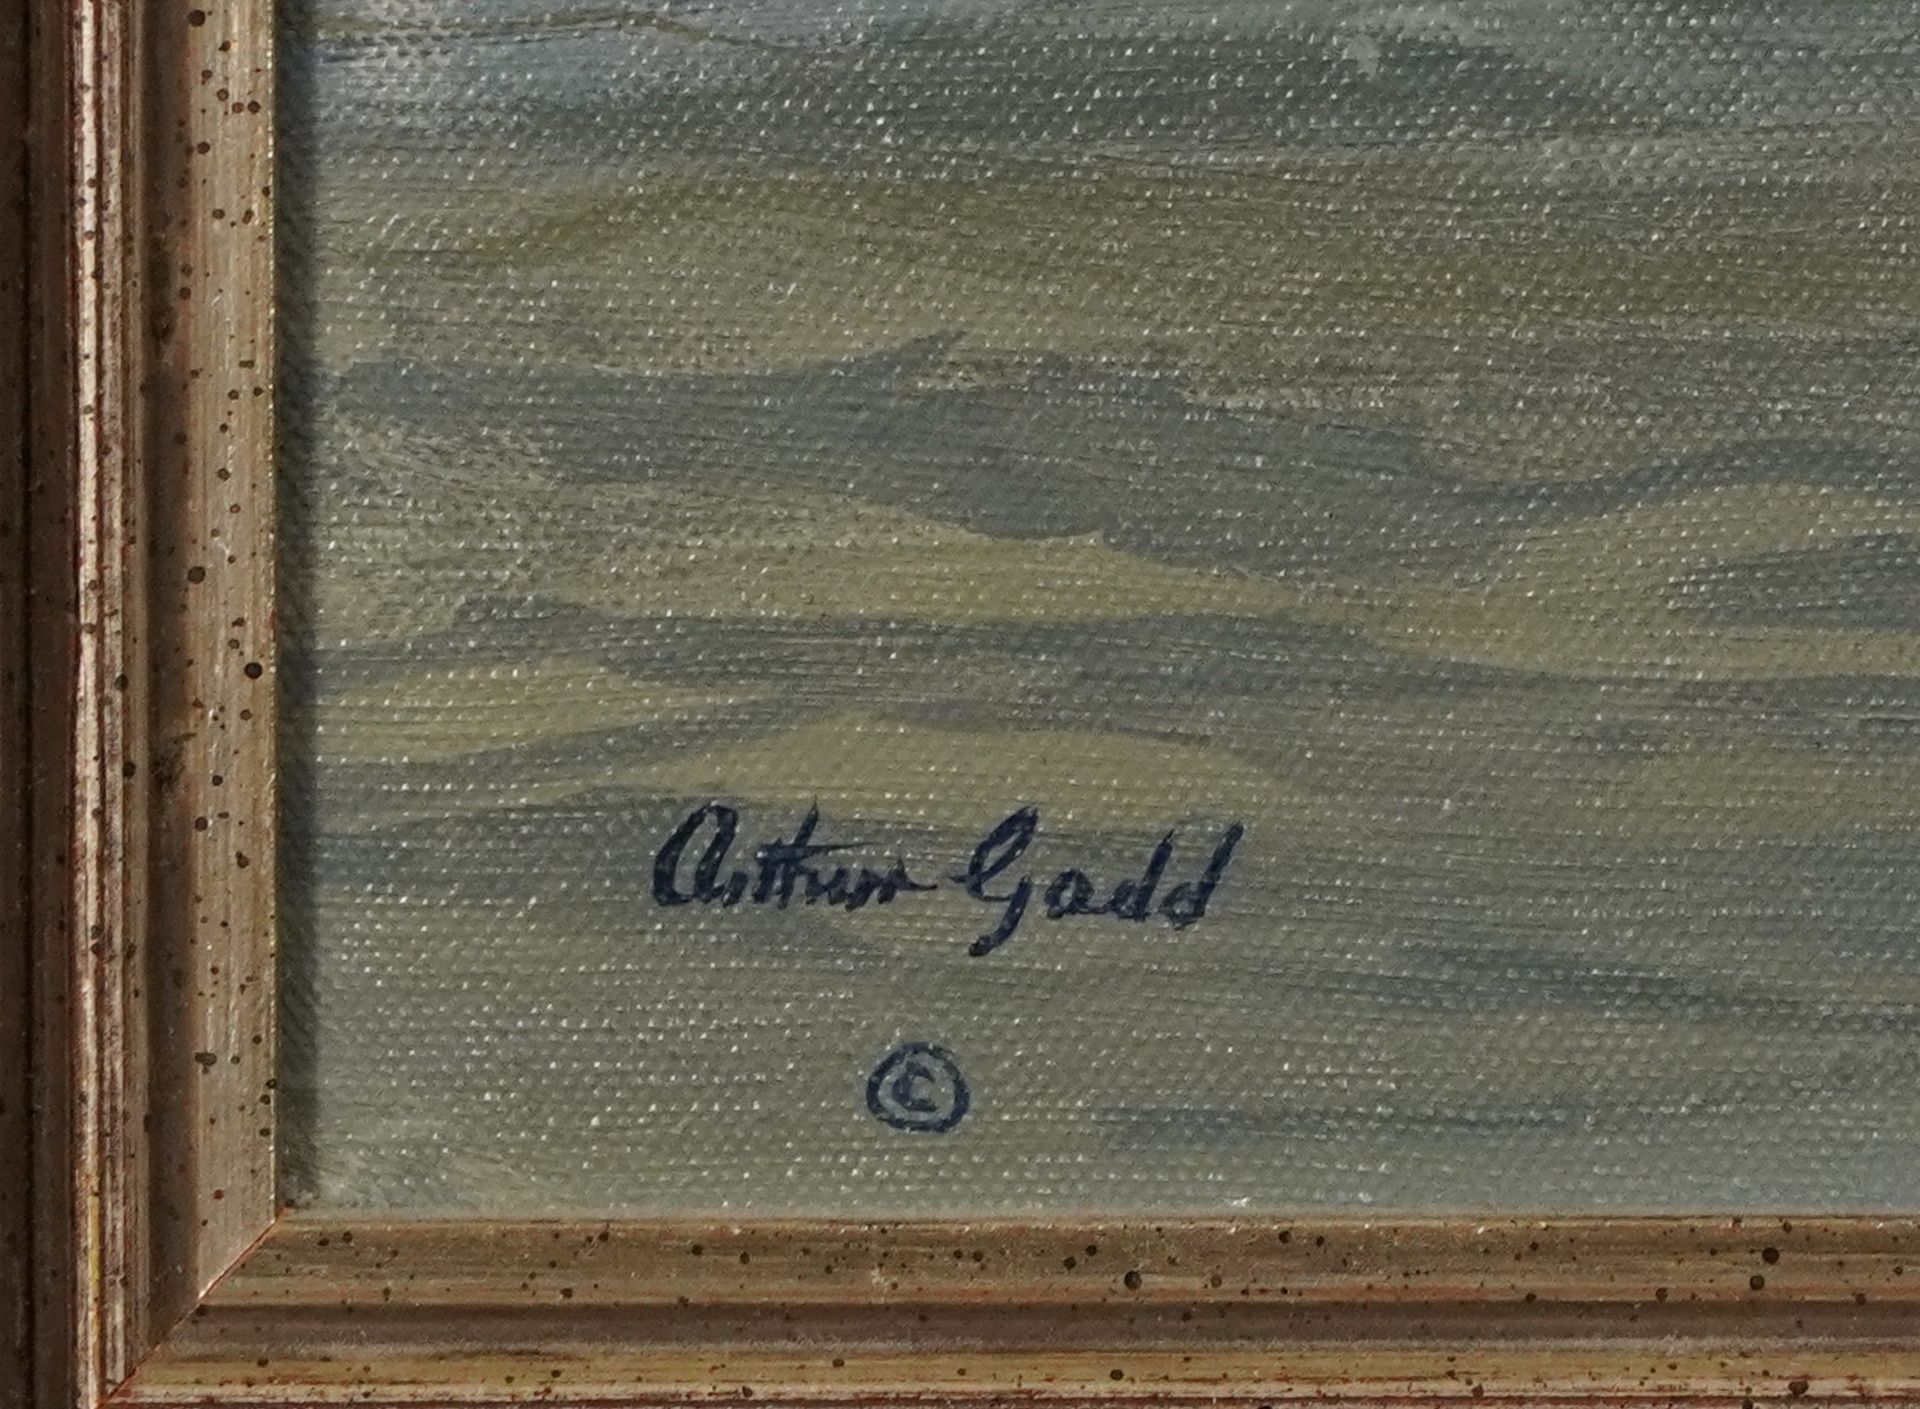 Arthur Gadd - Princess Elizabeth paddle steamer, Harrison's Warf, oil on canvas, details verso, - Image 3 of 7